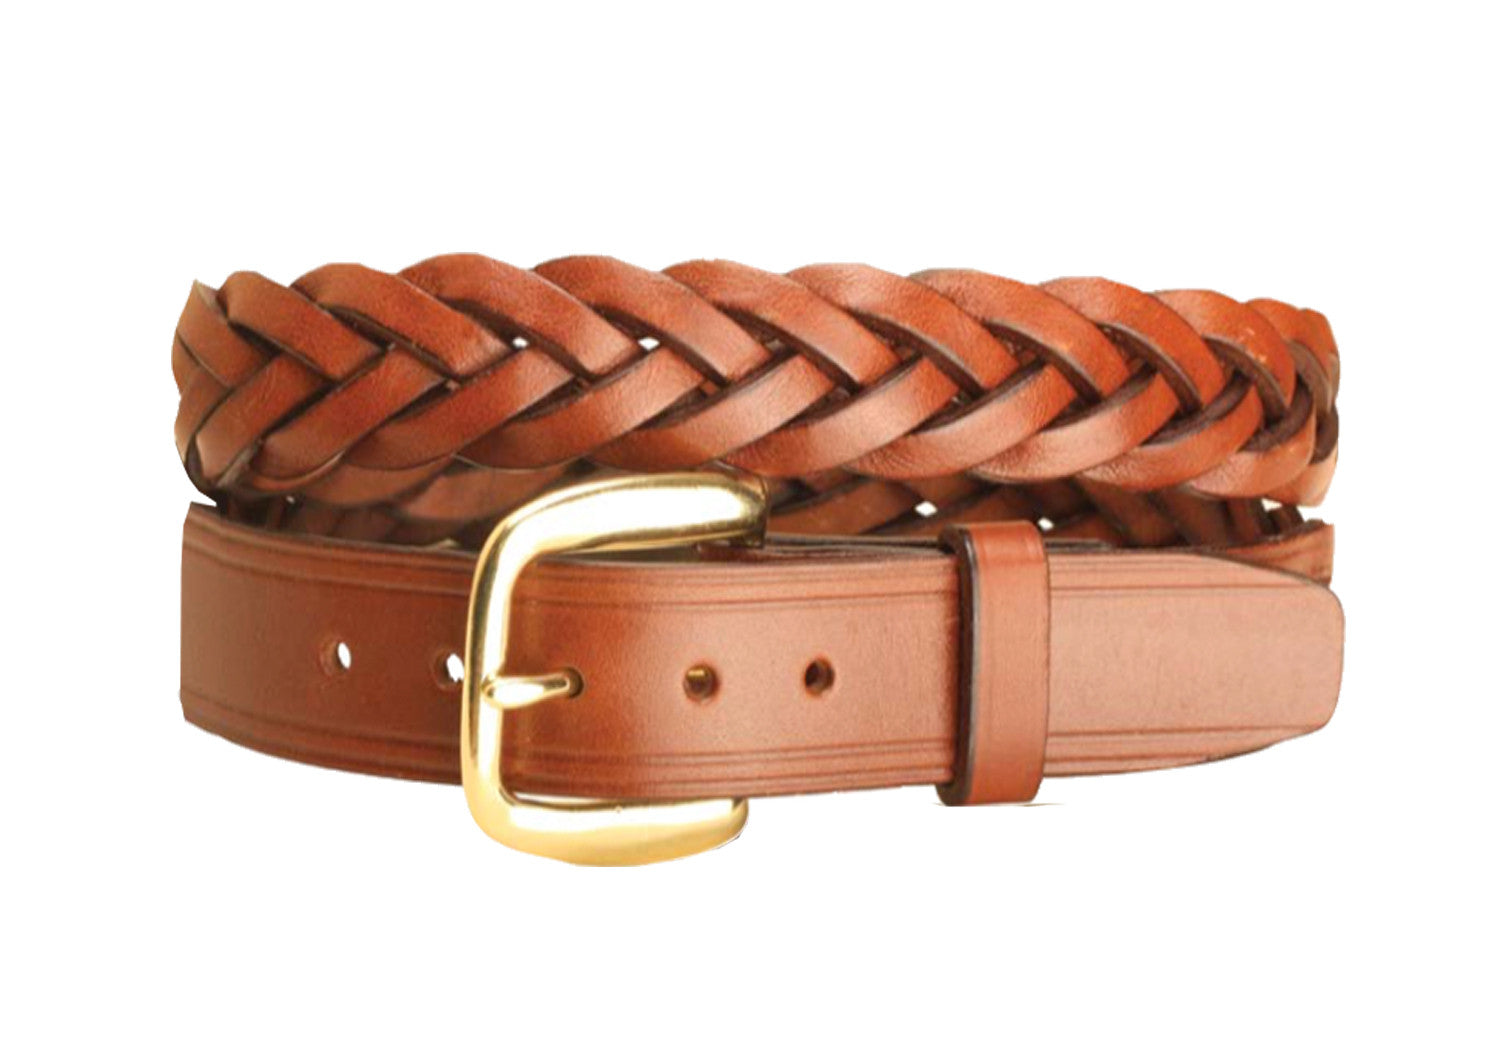 Tory Leather 1 1/4" Braided Leather Belt - North Shore Saddlery